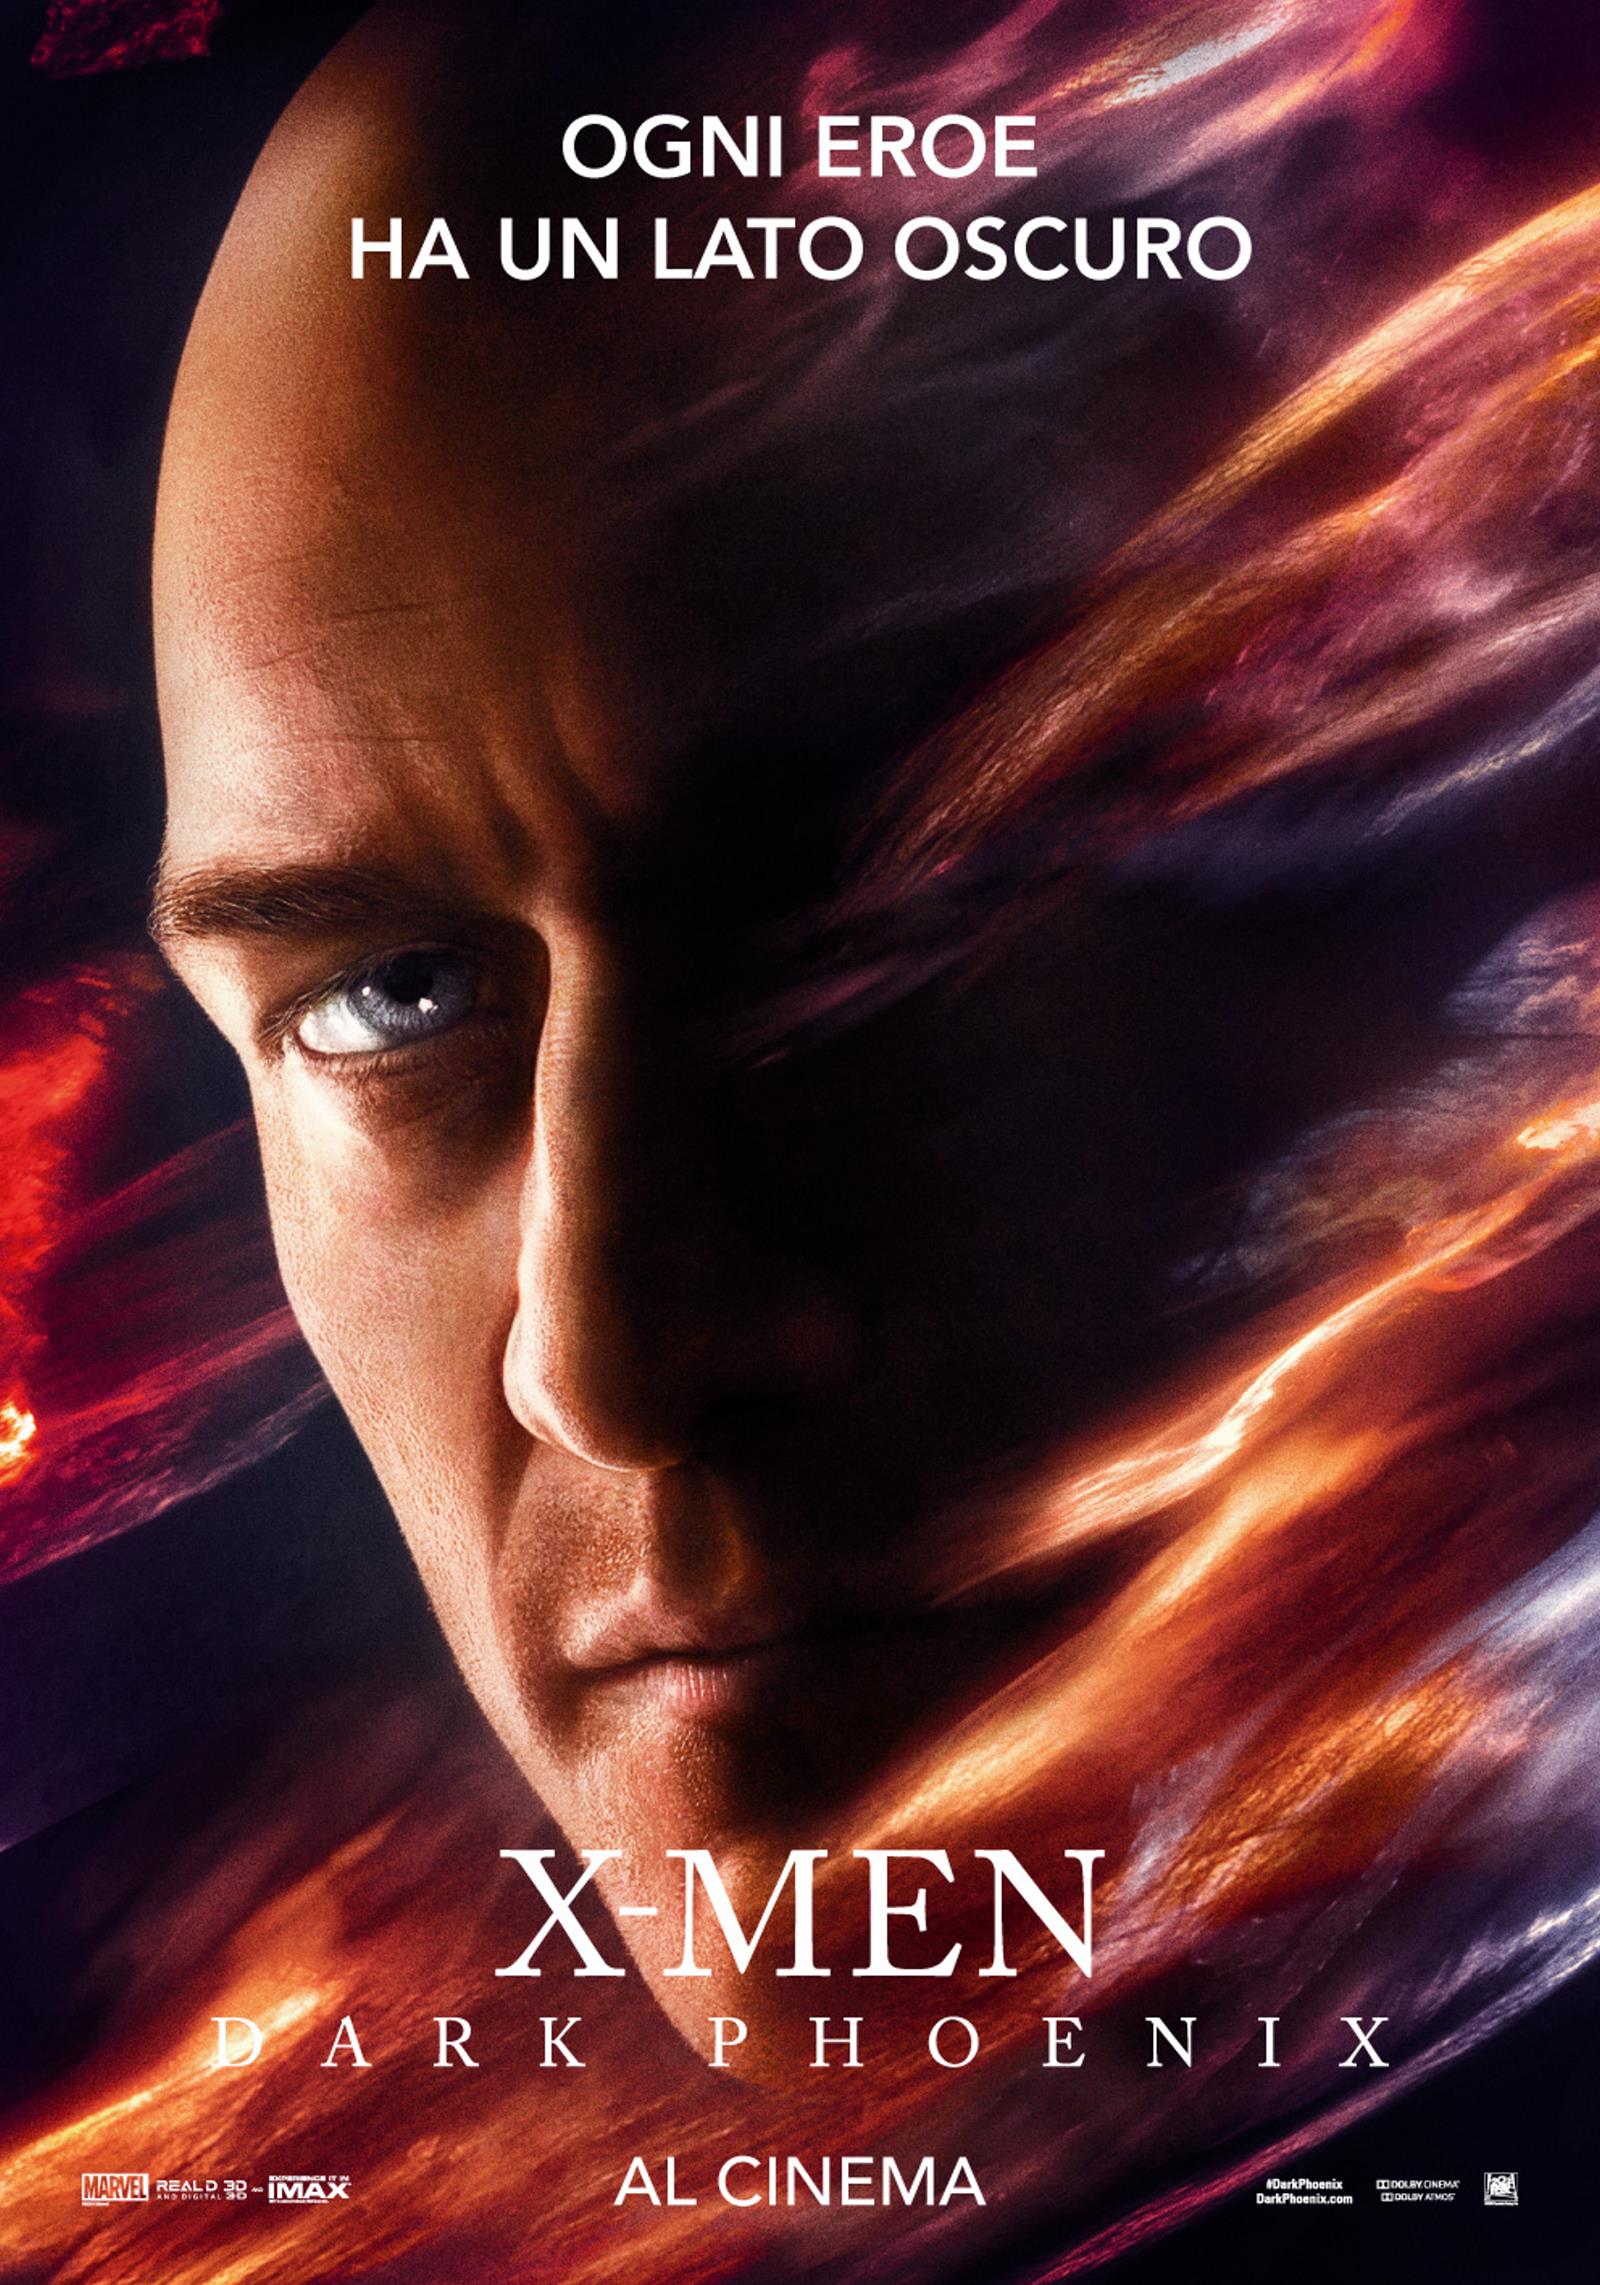 Foto, immagini, locandine X-Men: Dark Phoenix